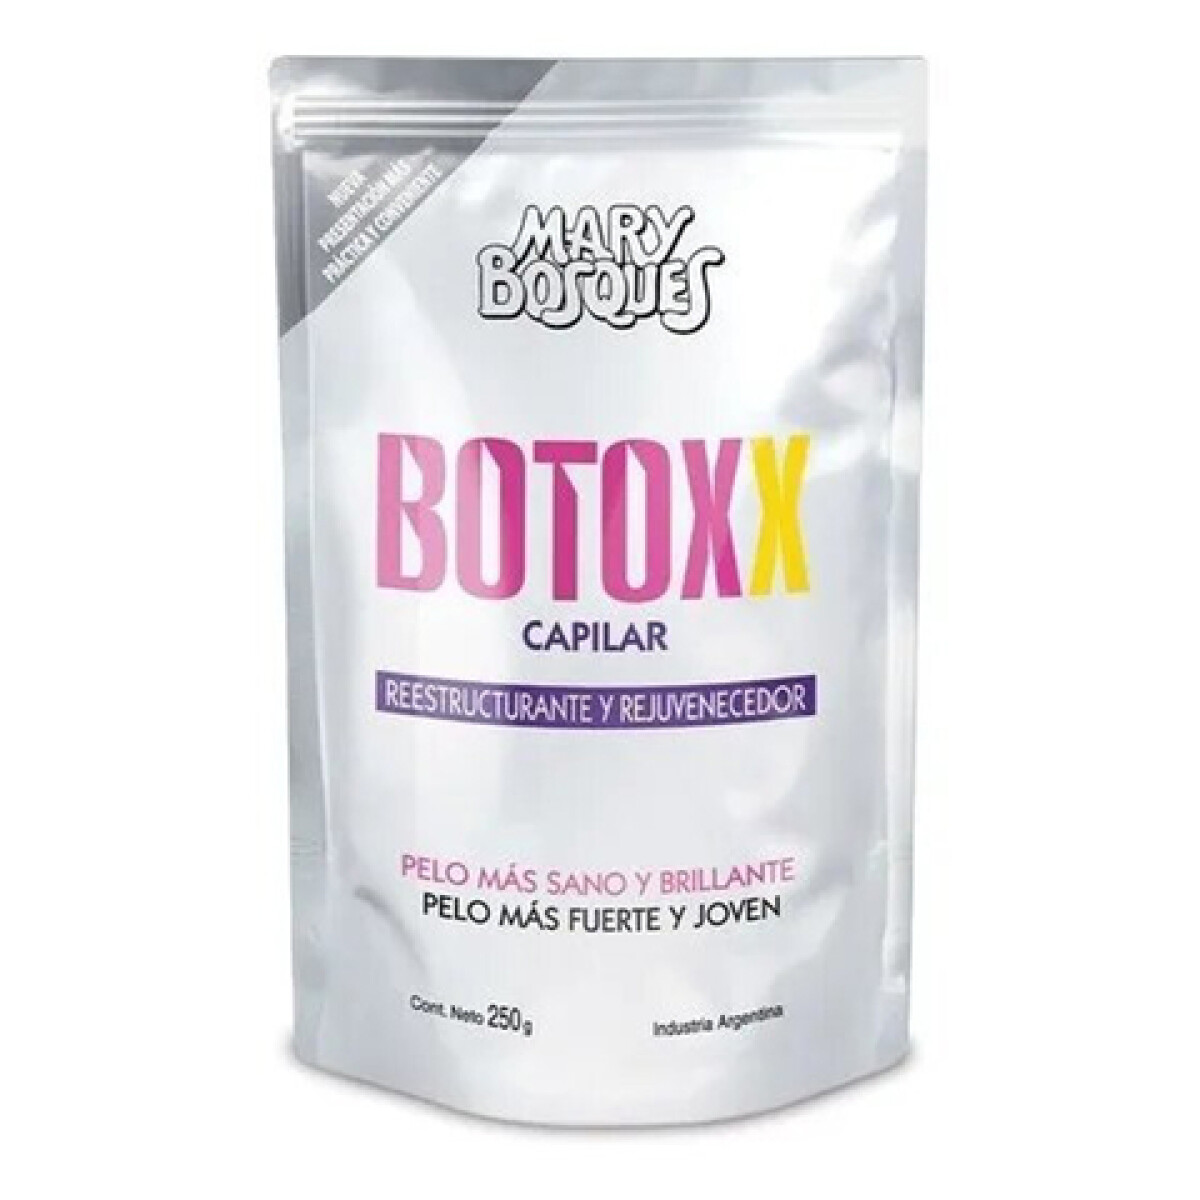 Mary Bosques Botoxx Capilar Reestructurante y Rejuvenecedor 250g 